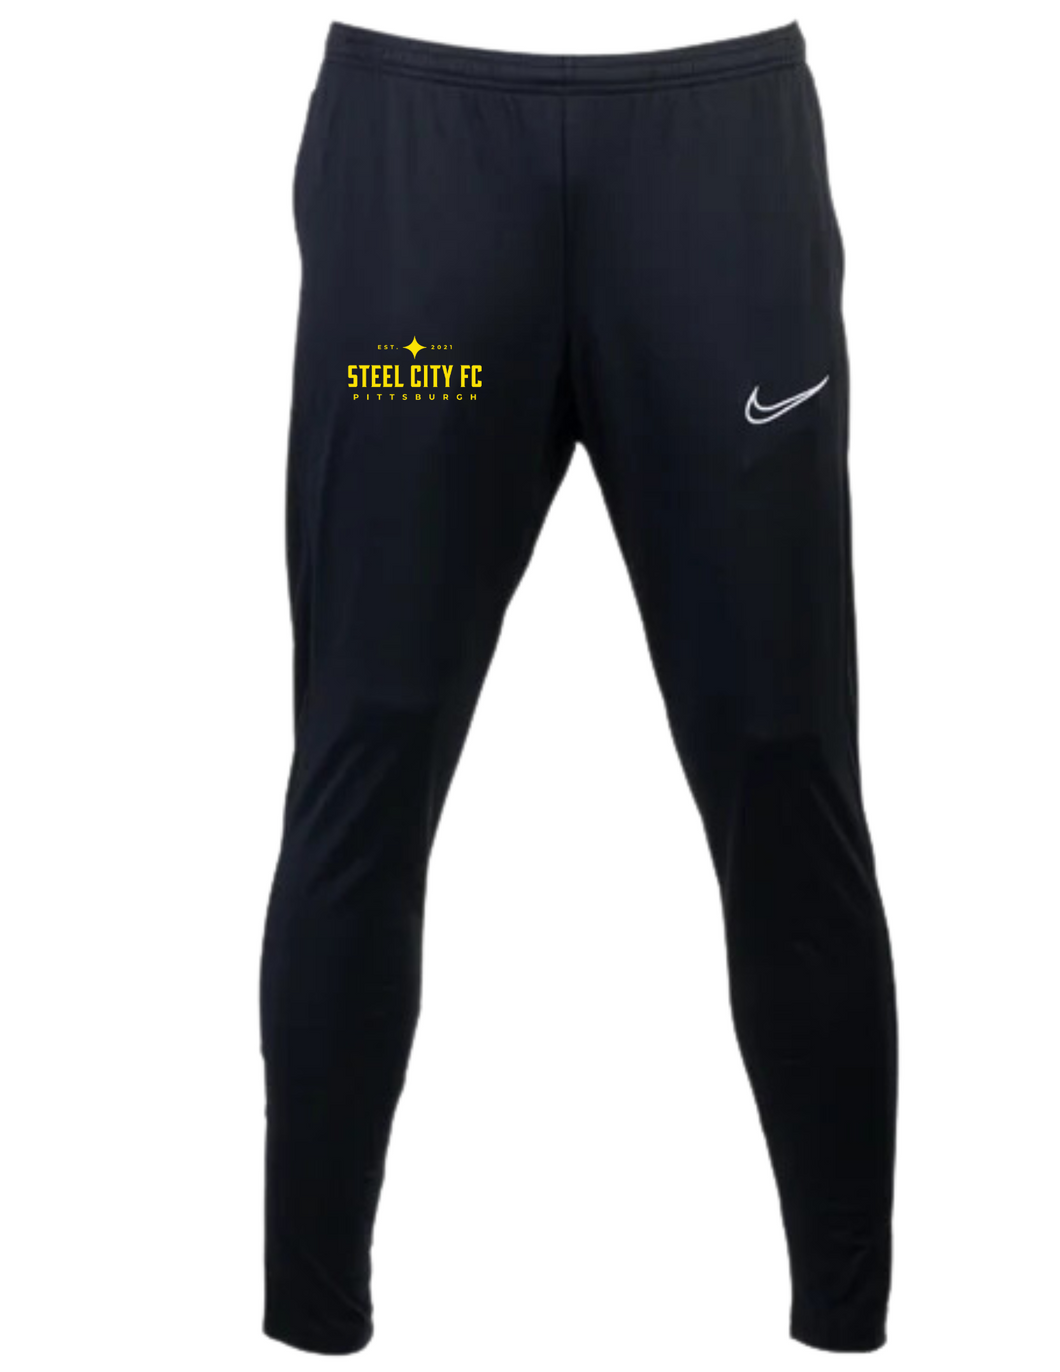 NEW!!! AVAILABLE SCFC - Nike Academy 23 Training Pants